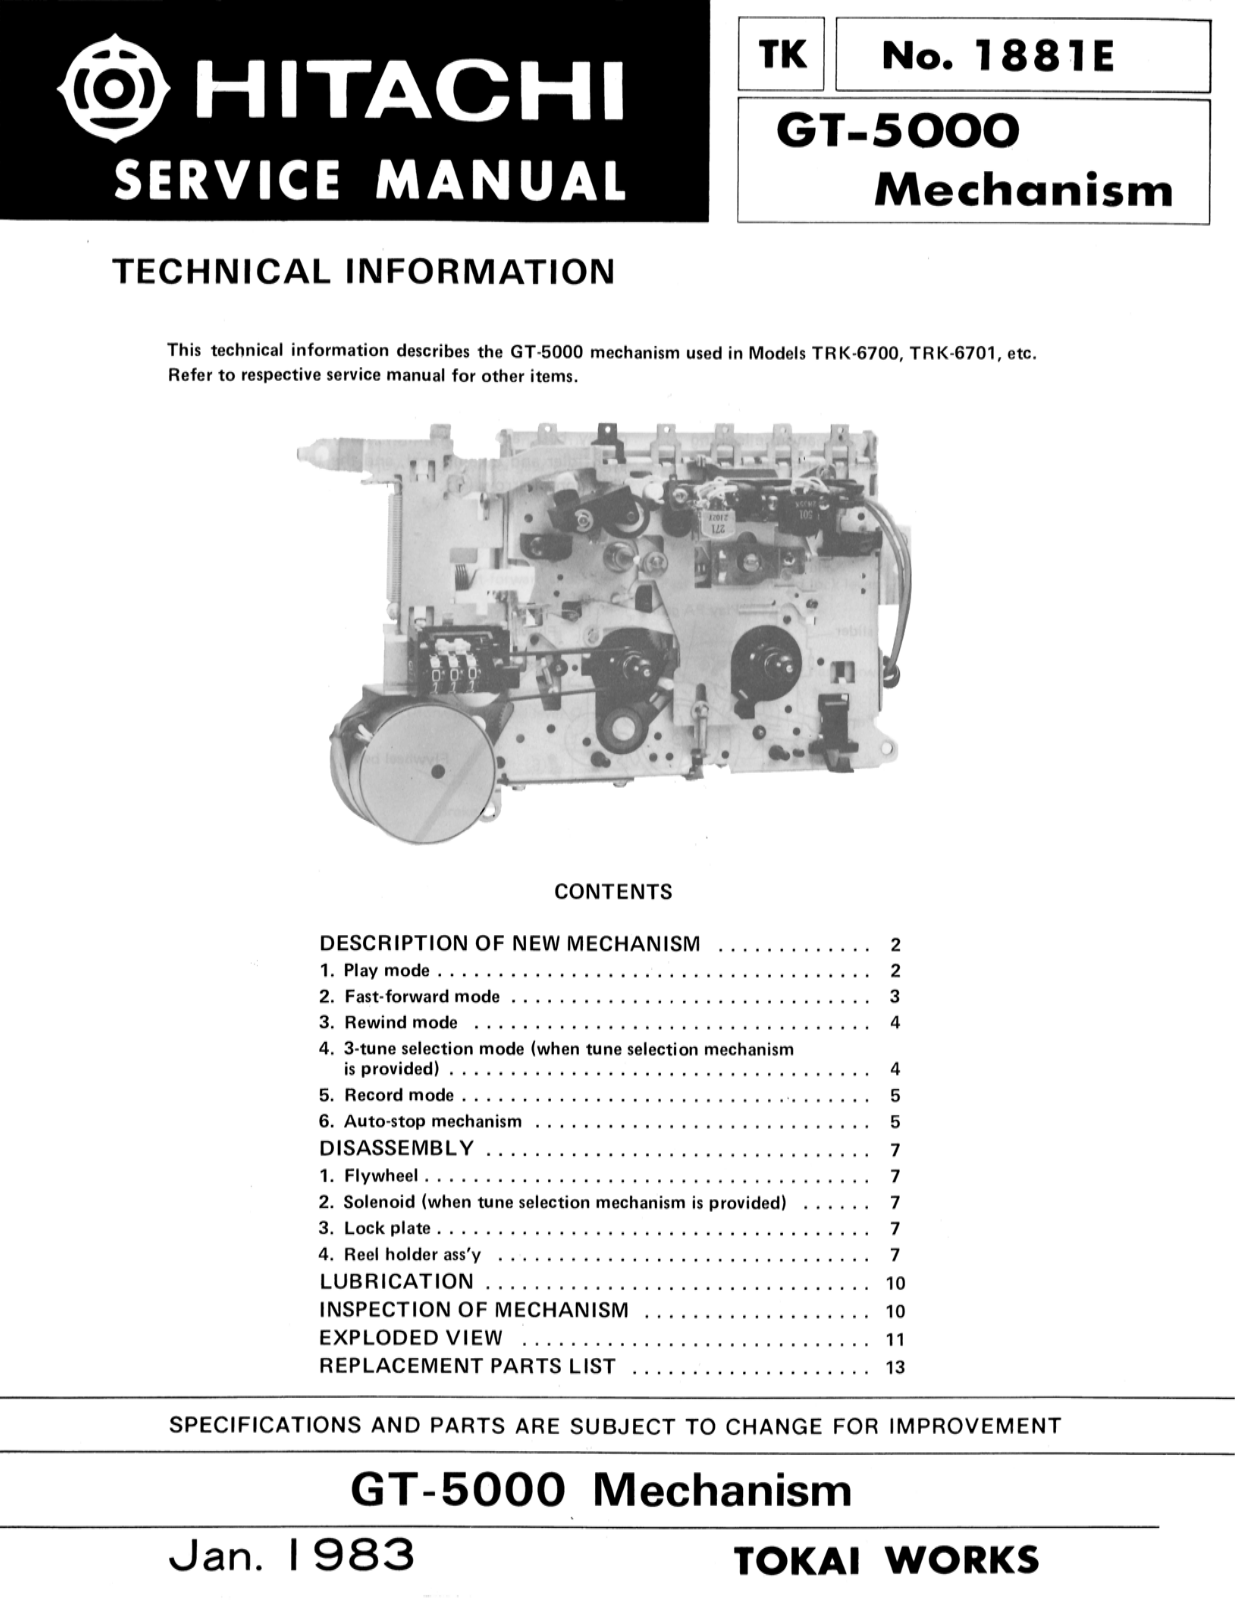 Hitachi GT-5000 Service Manual